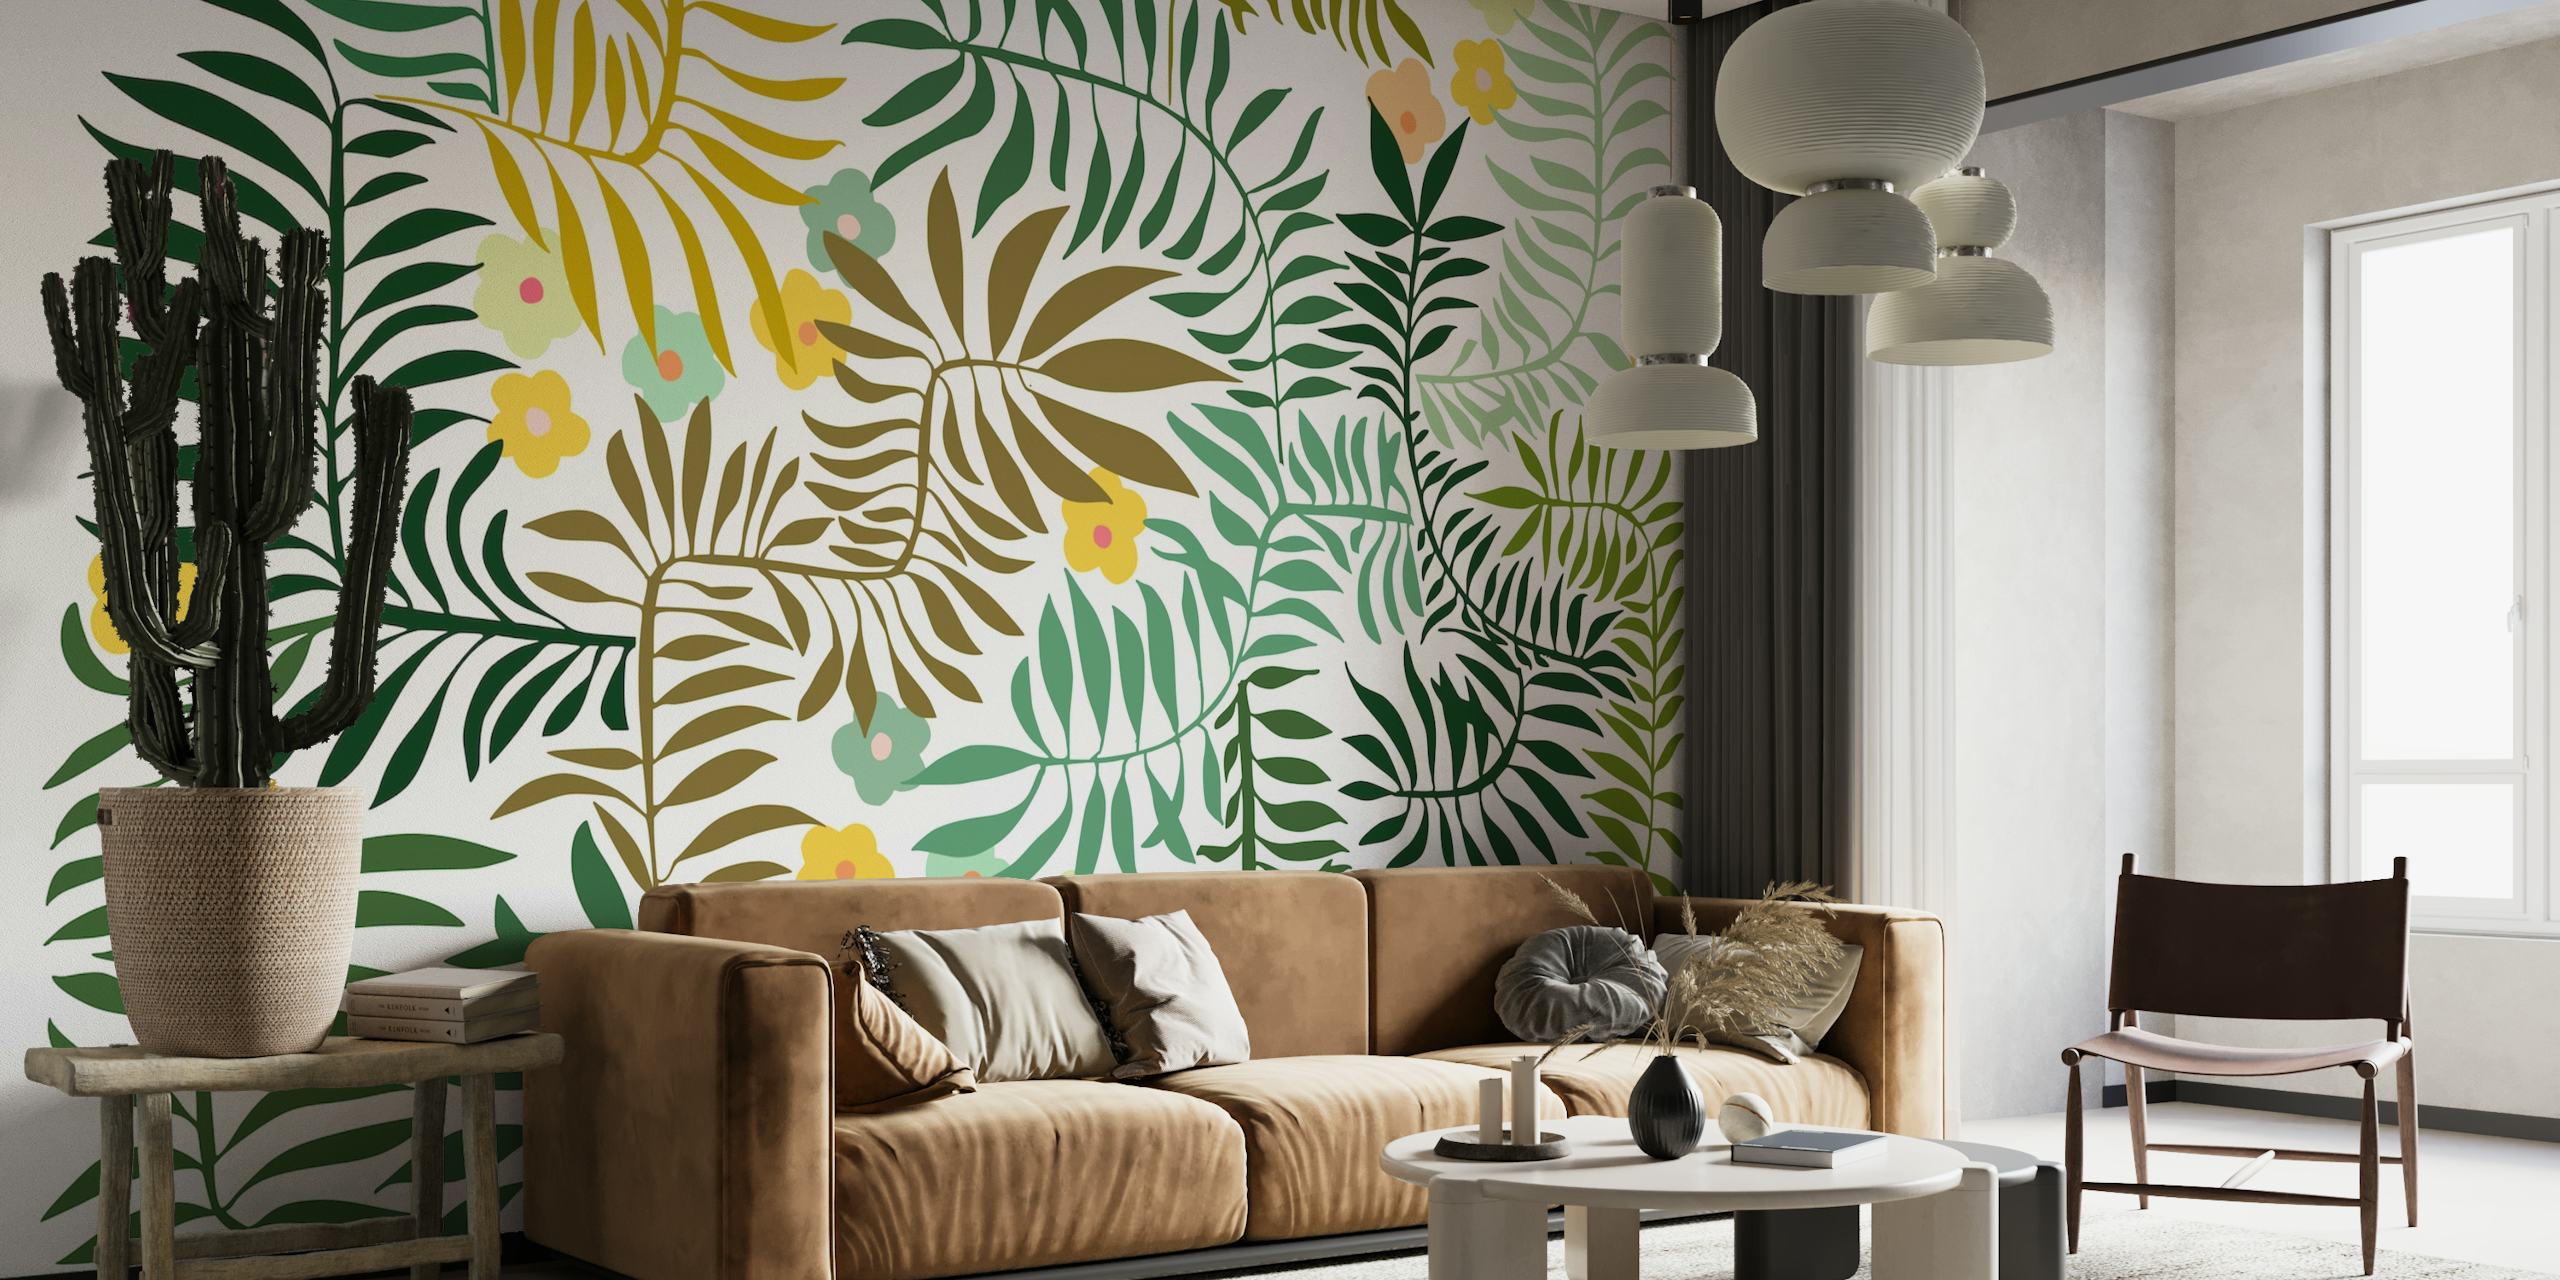 Little Palm Tree Leaves wallpaper